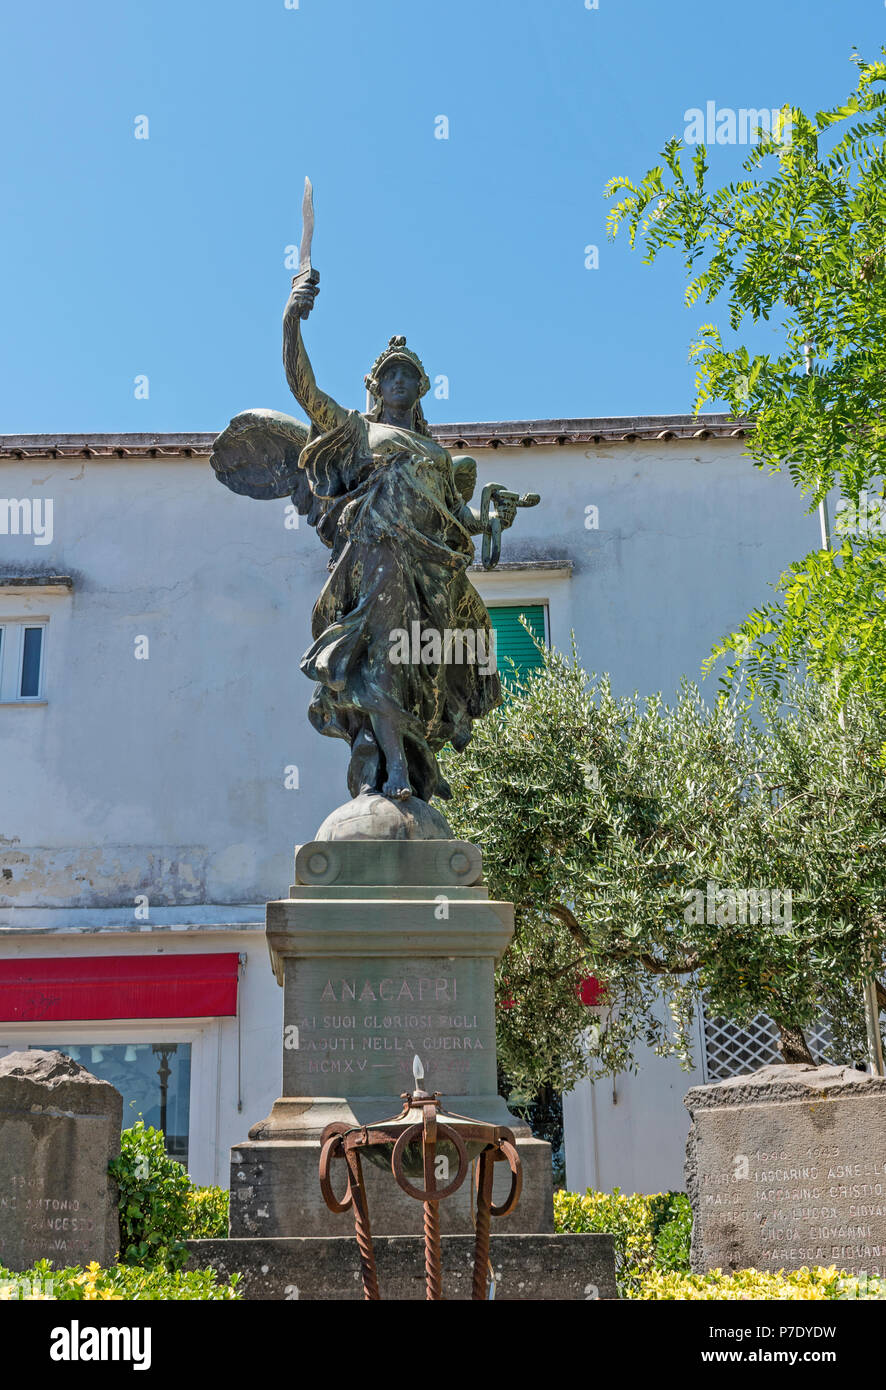 Krieg, Statue, Denkmal, Piazza Vittoria, Anacapri, Capri, Italien. Stockfoto